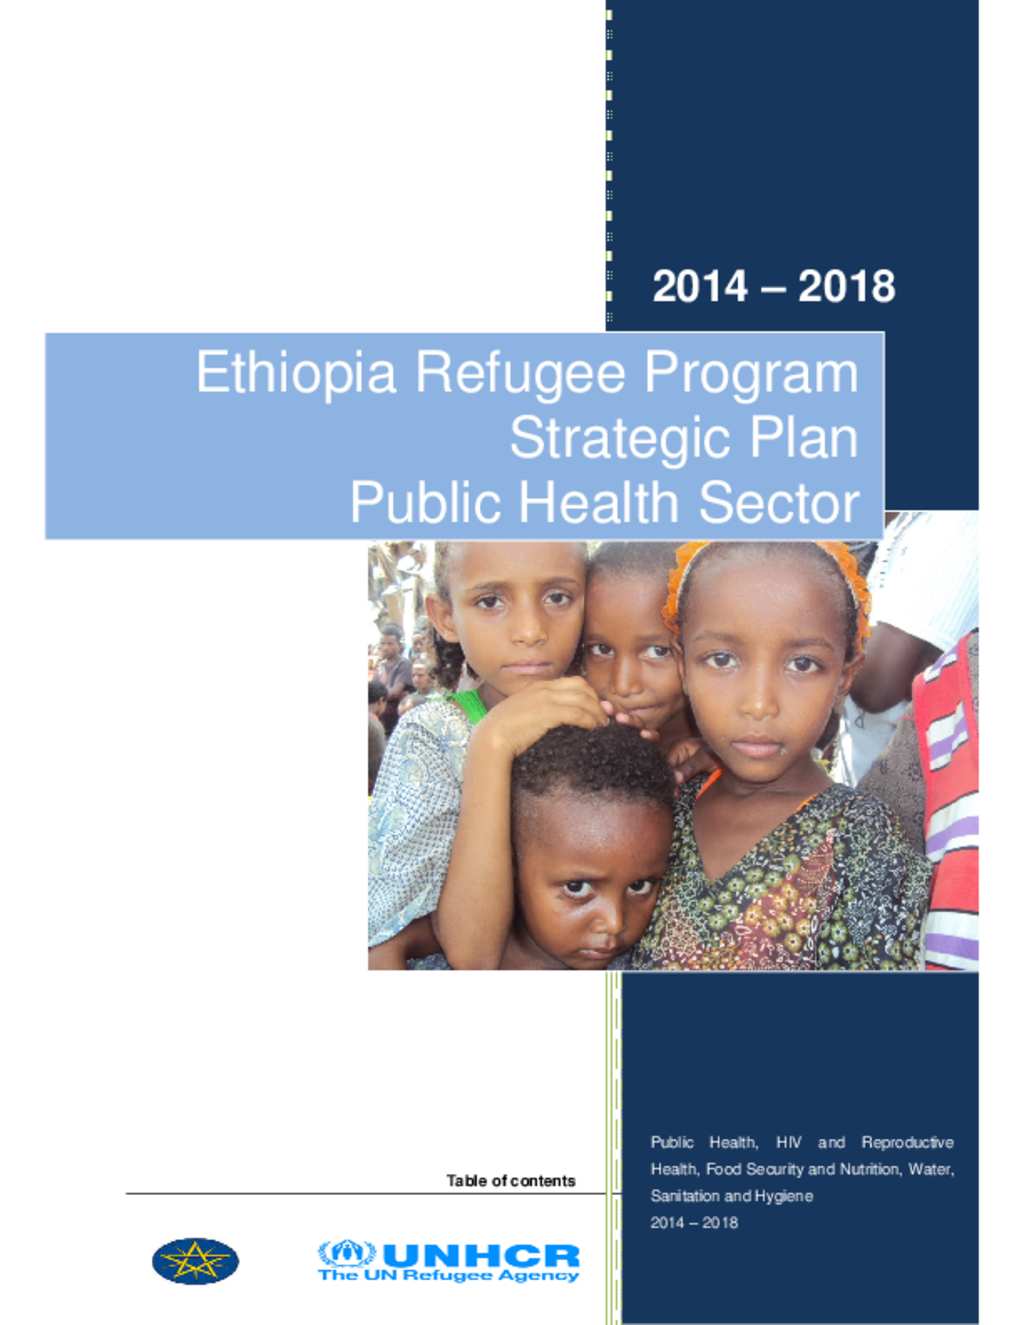 research topics in public health in ethiopia